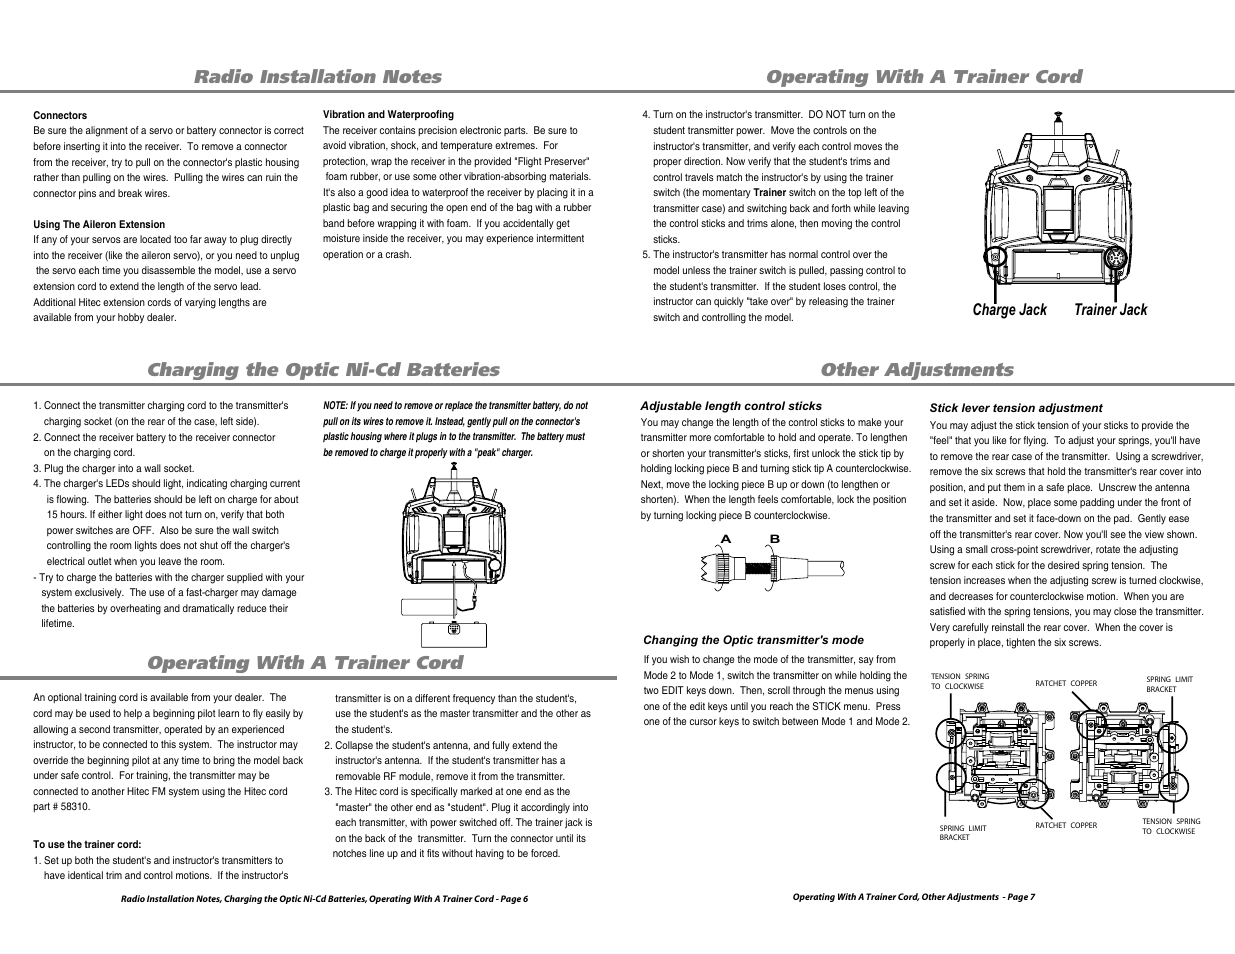 Charge jack trainer jack | HITEC Optic 6 User Manual | Page 4 / 30